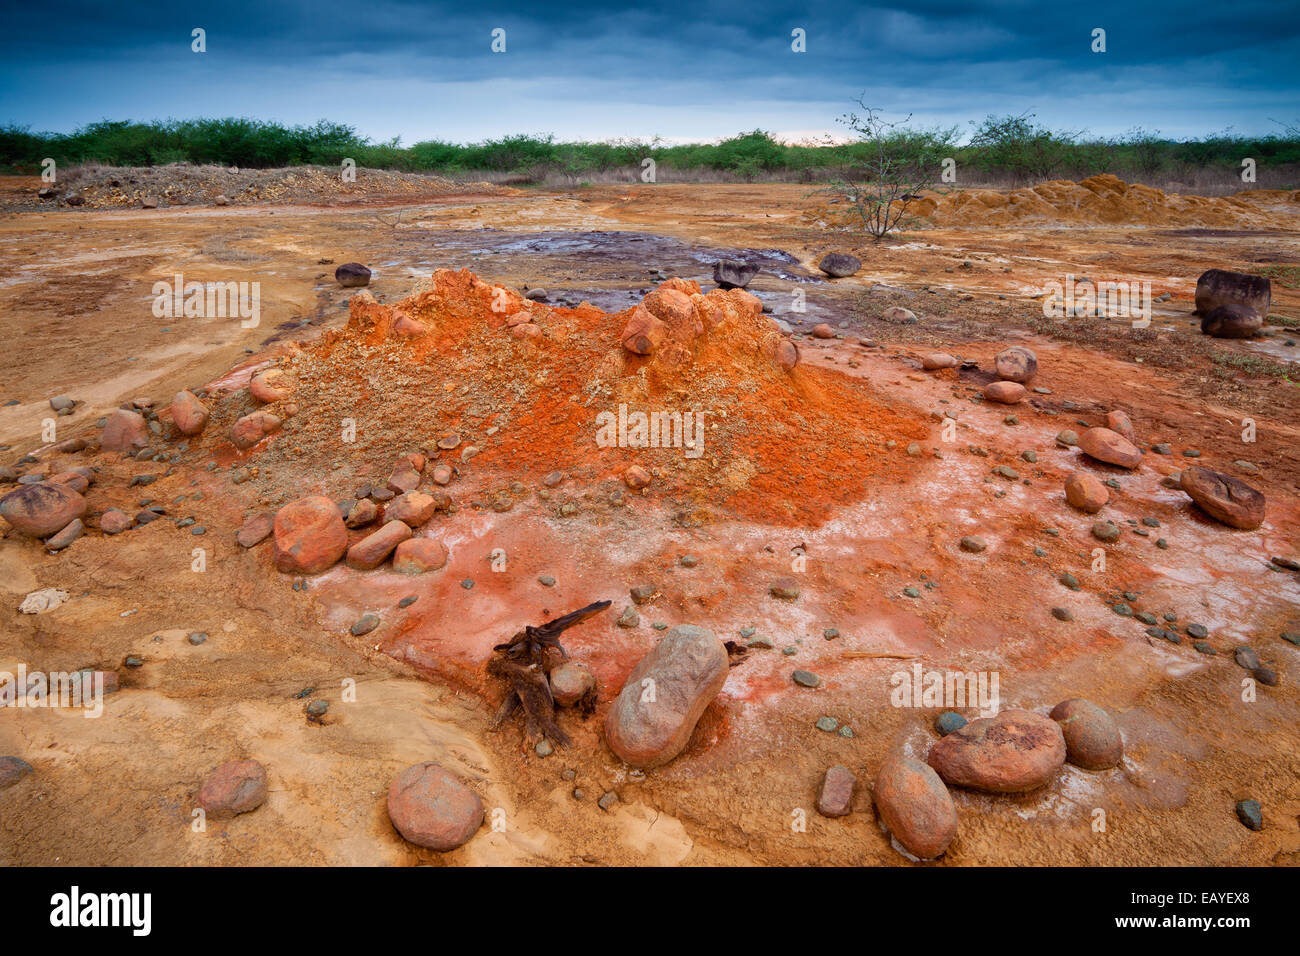 Panama landscape with eroded soil in Sarigua national park (desert), Herrera province, Azuero peninsula, Republic of Panama, Central America. Stock Photo